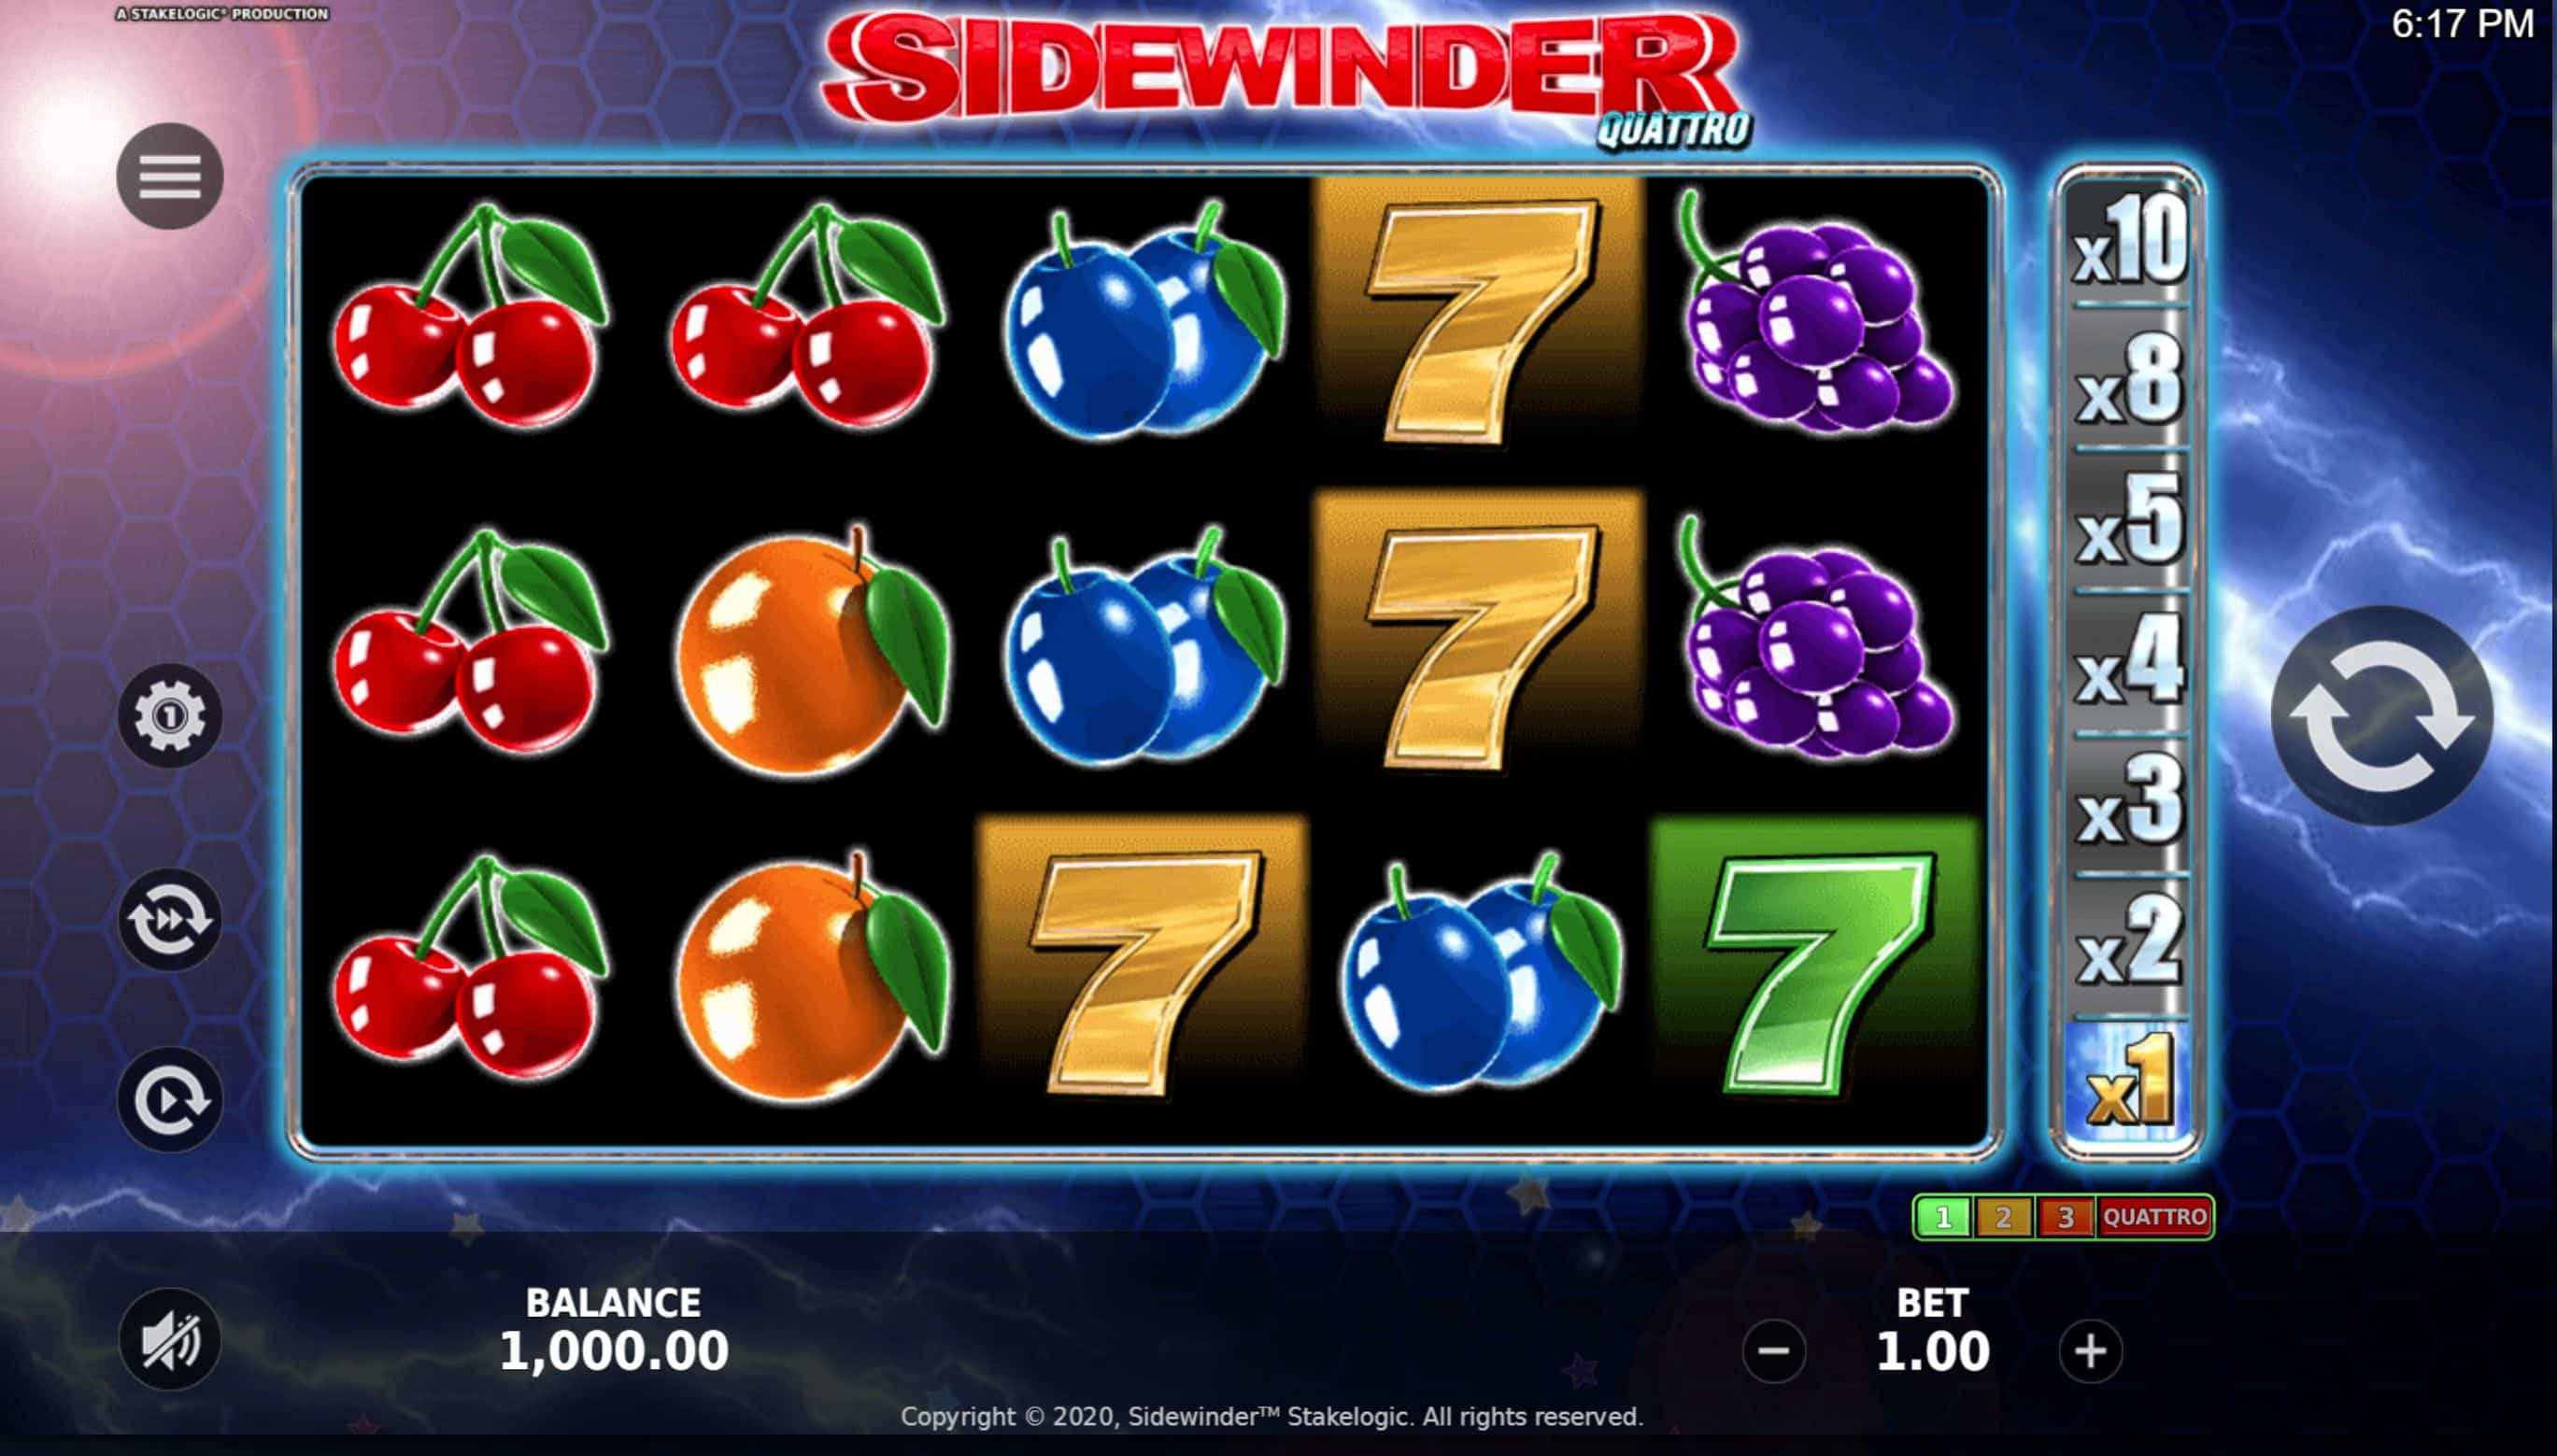 SideWinder Quattro Slot Game Free Play at Casino Ireland 01